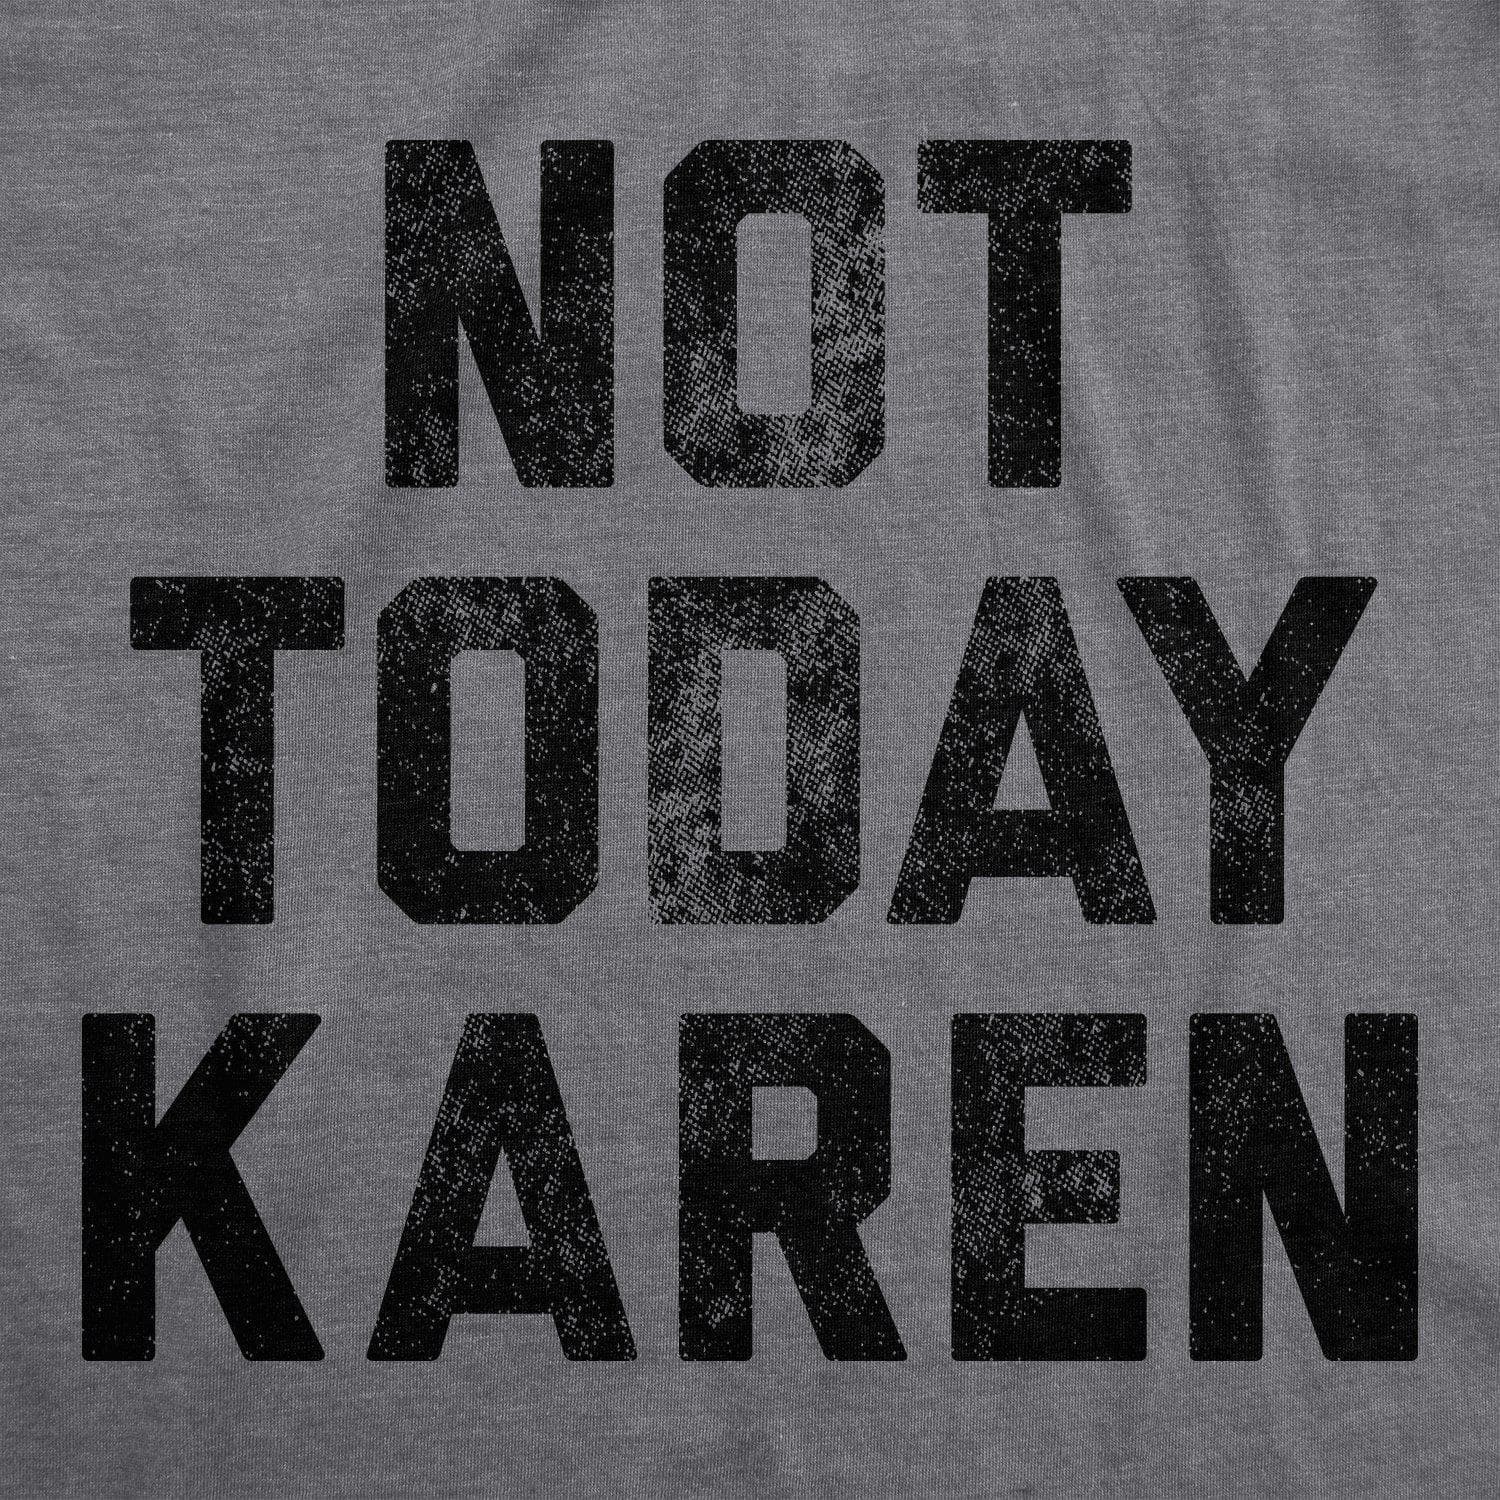 Not Today Karen Men's Tshirt - Crazy Dog T-Shirts